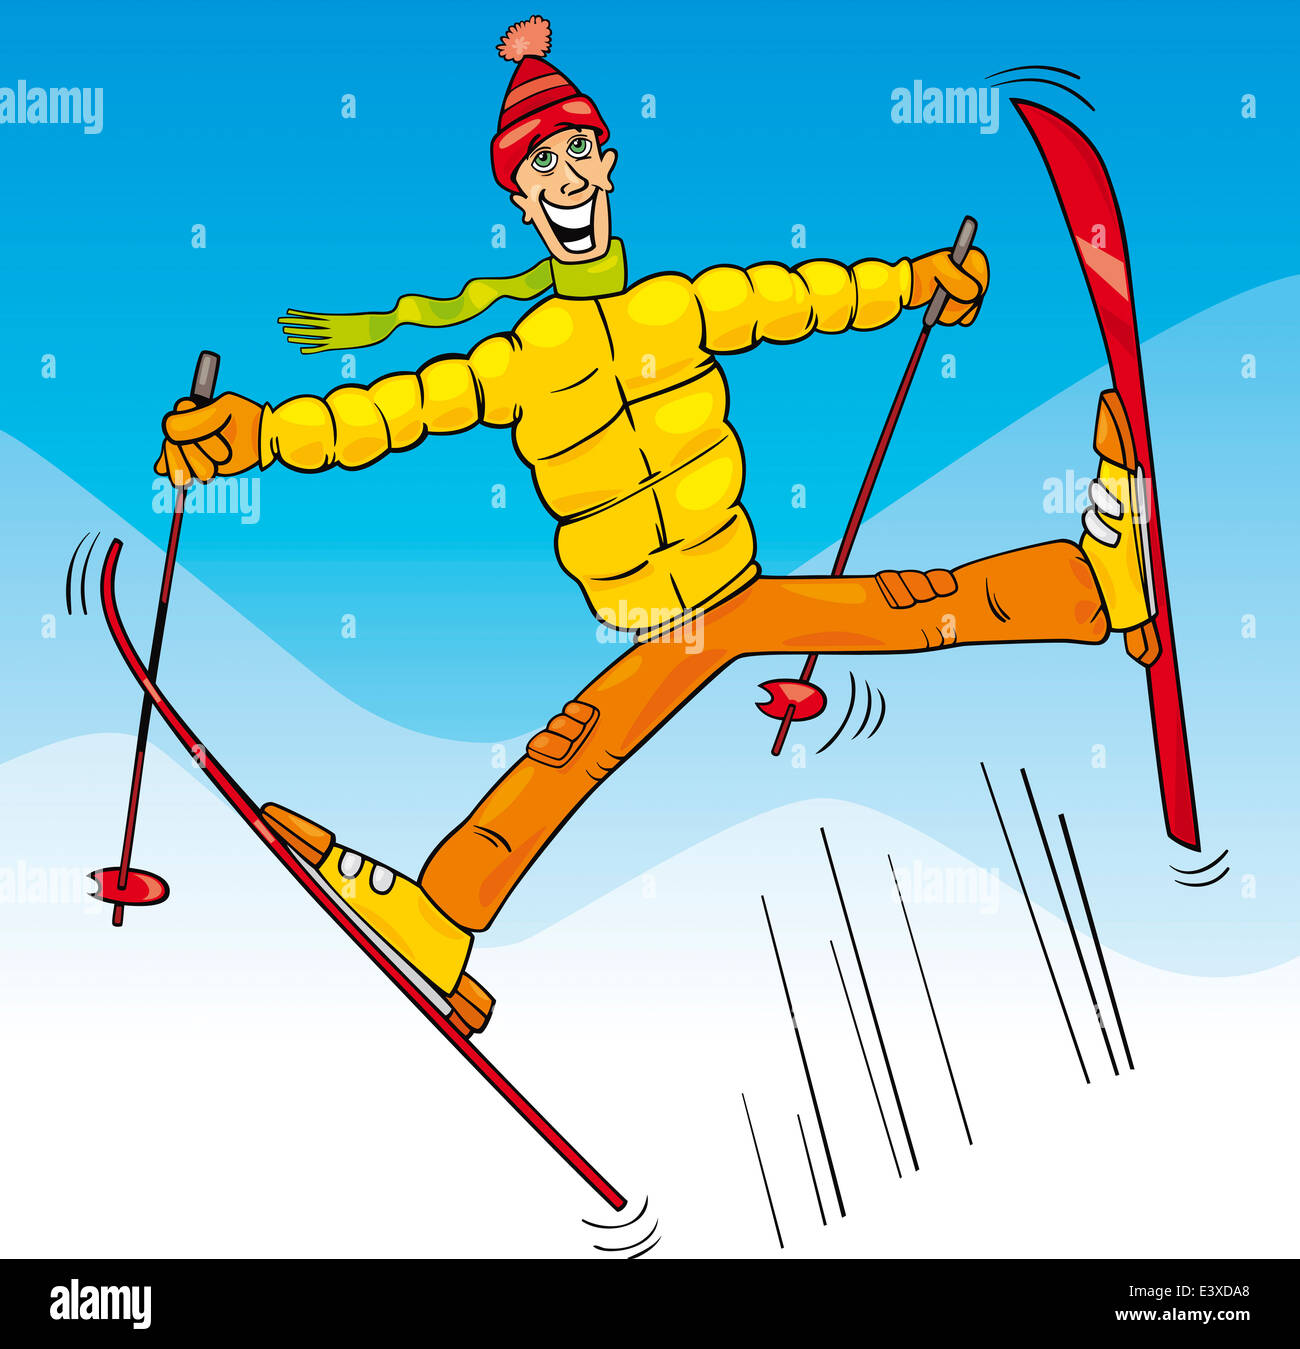 Cartoon Illustrations of Funny Man Jumping on Ski Stock Photo - Alamy